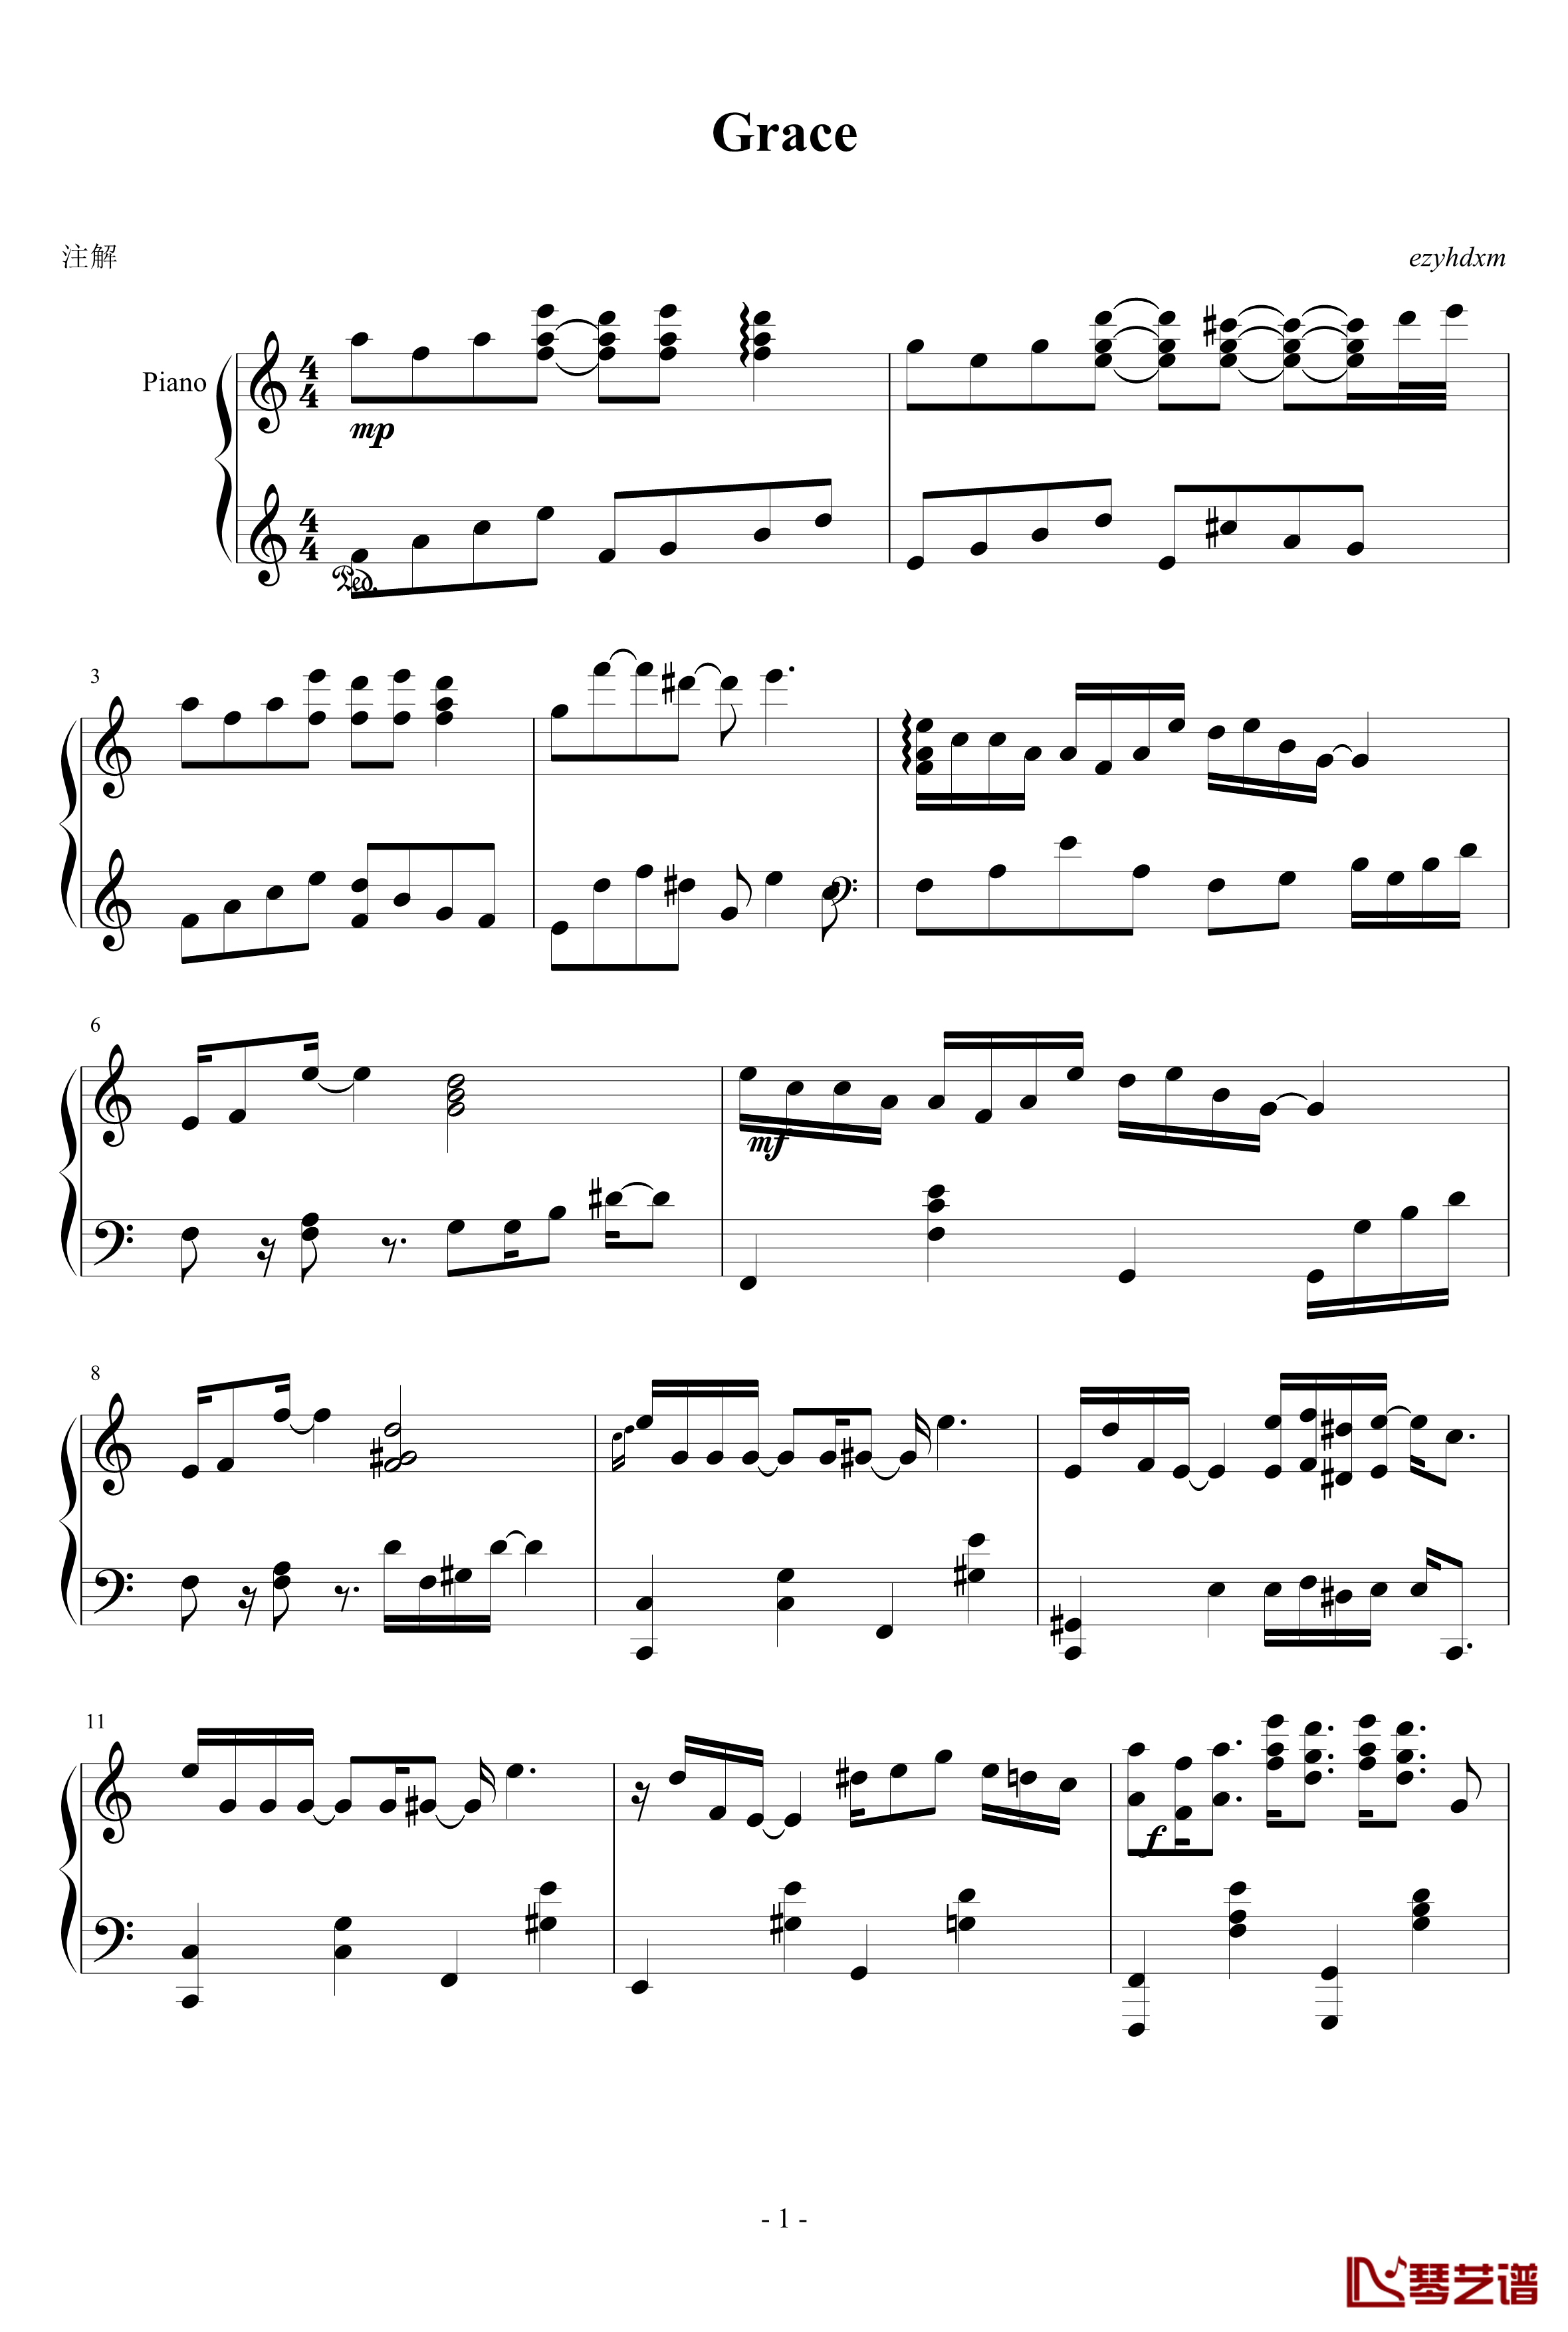 Grace钢琴谱-ezyhdxm1